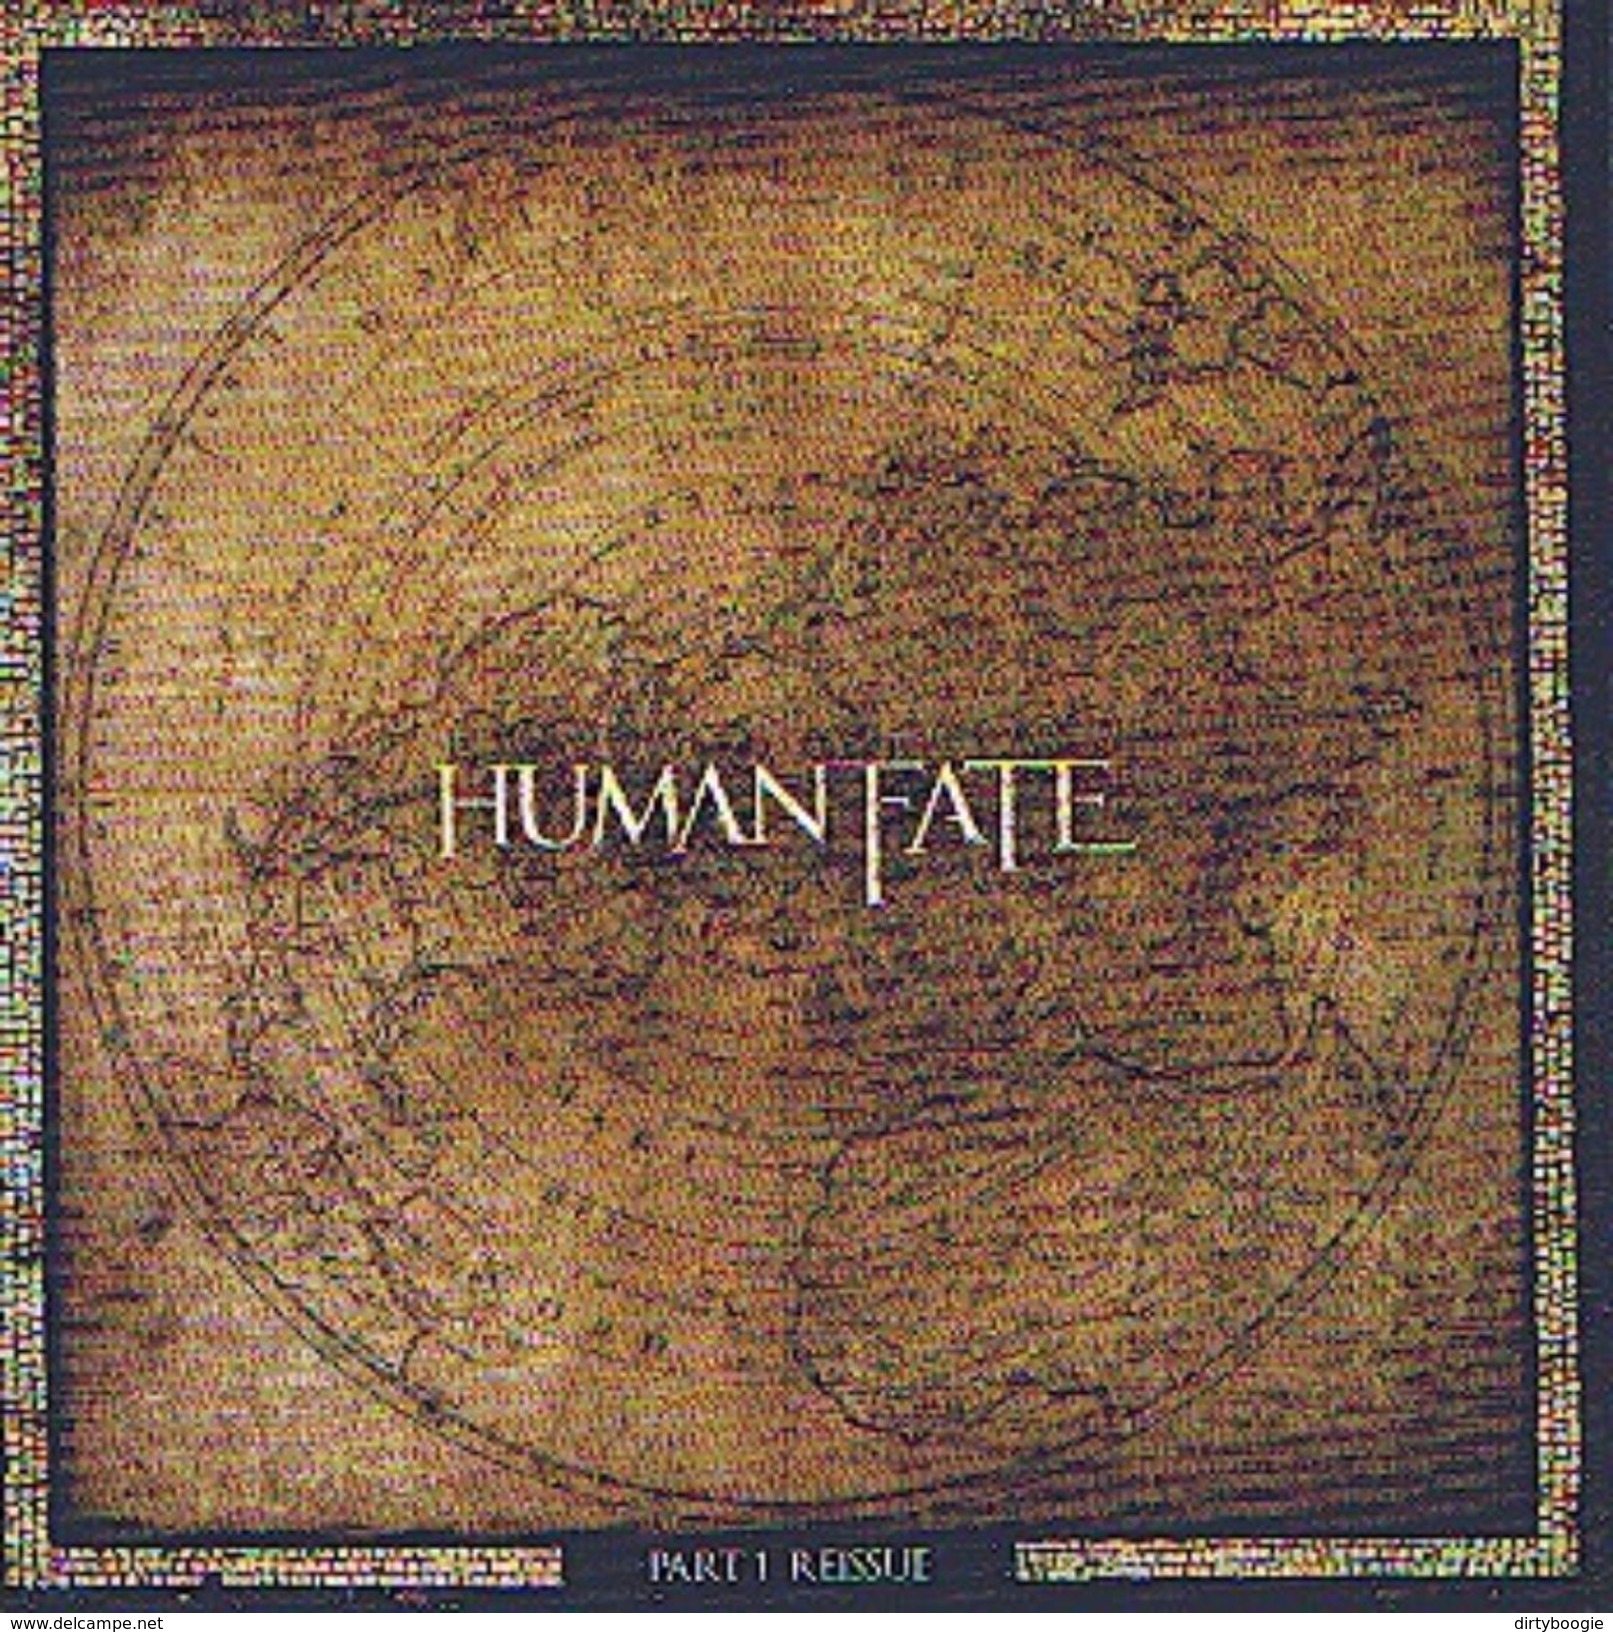 HUMAN FATE - Part 1 Reissue - CD - METAL - Hard Rock & Metal